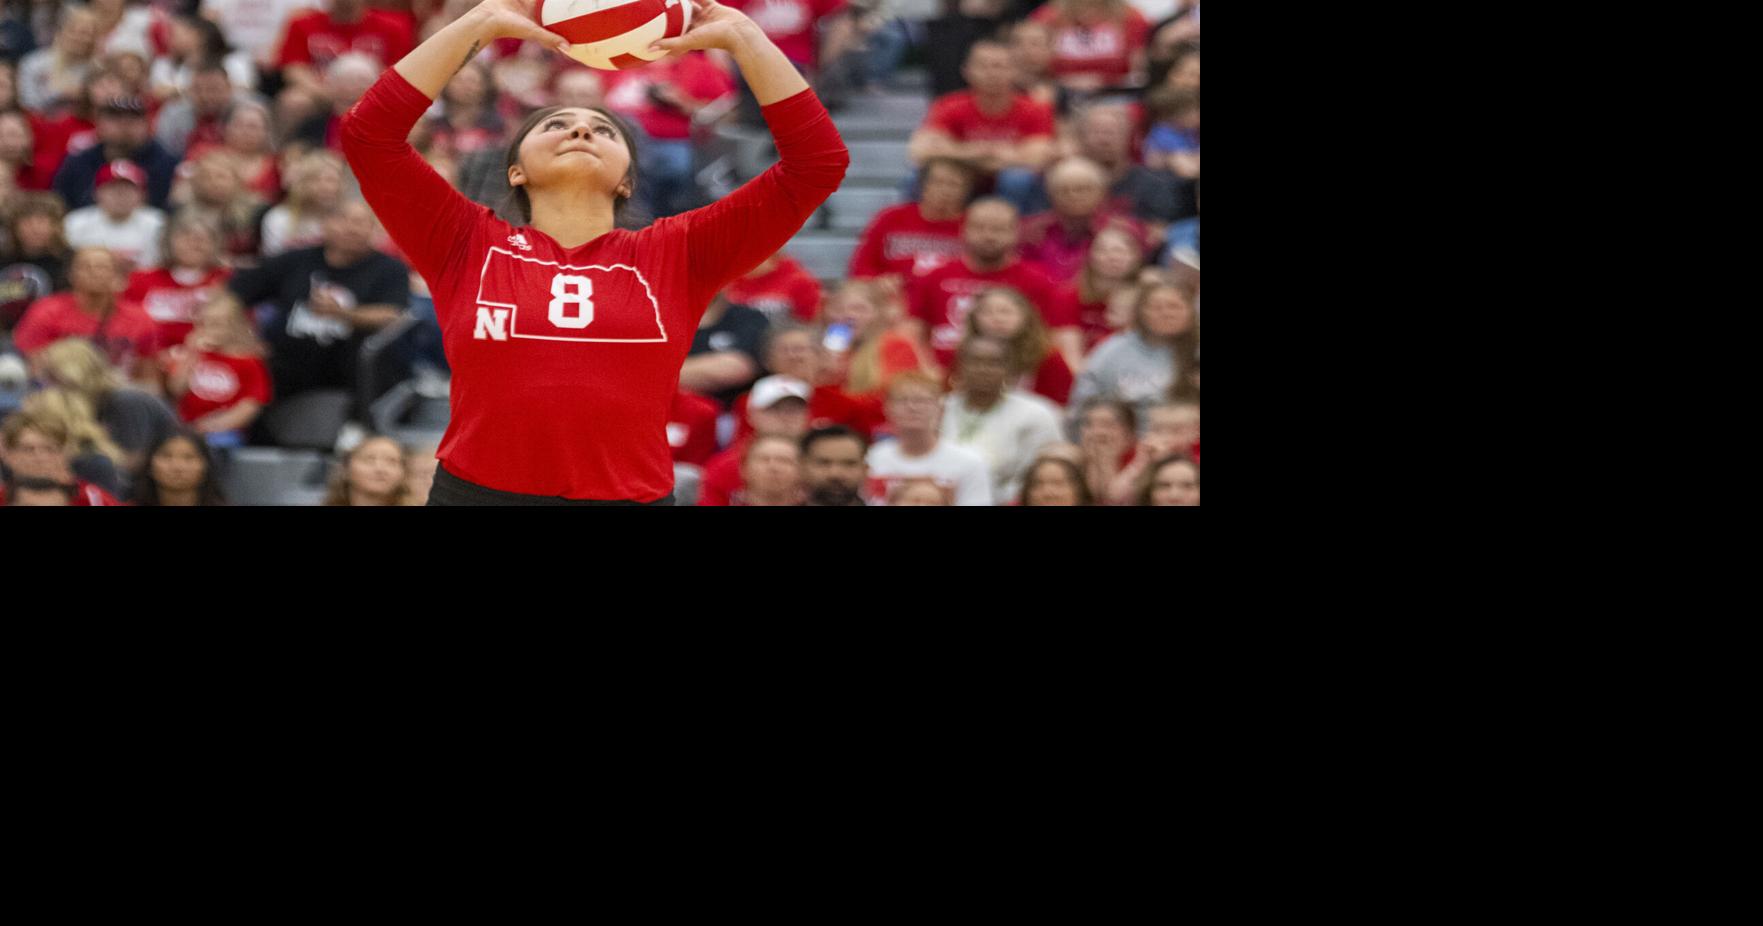 Nebraska Volleyball Rodrguez Number 8 Jersey